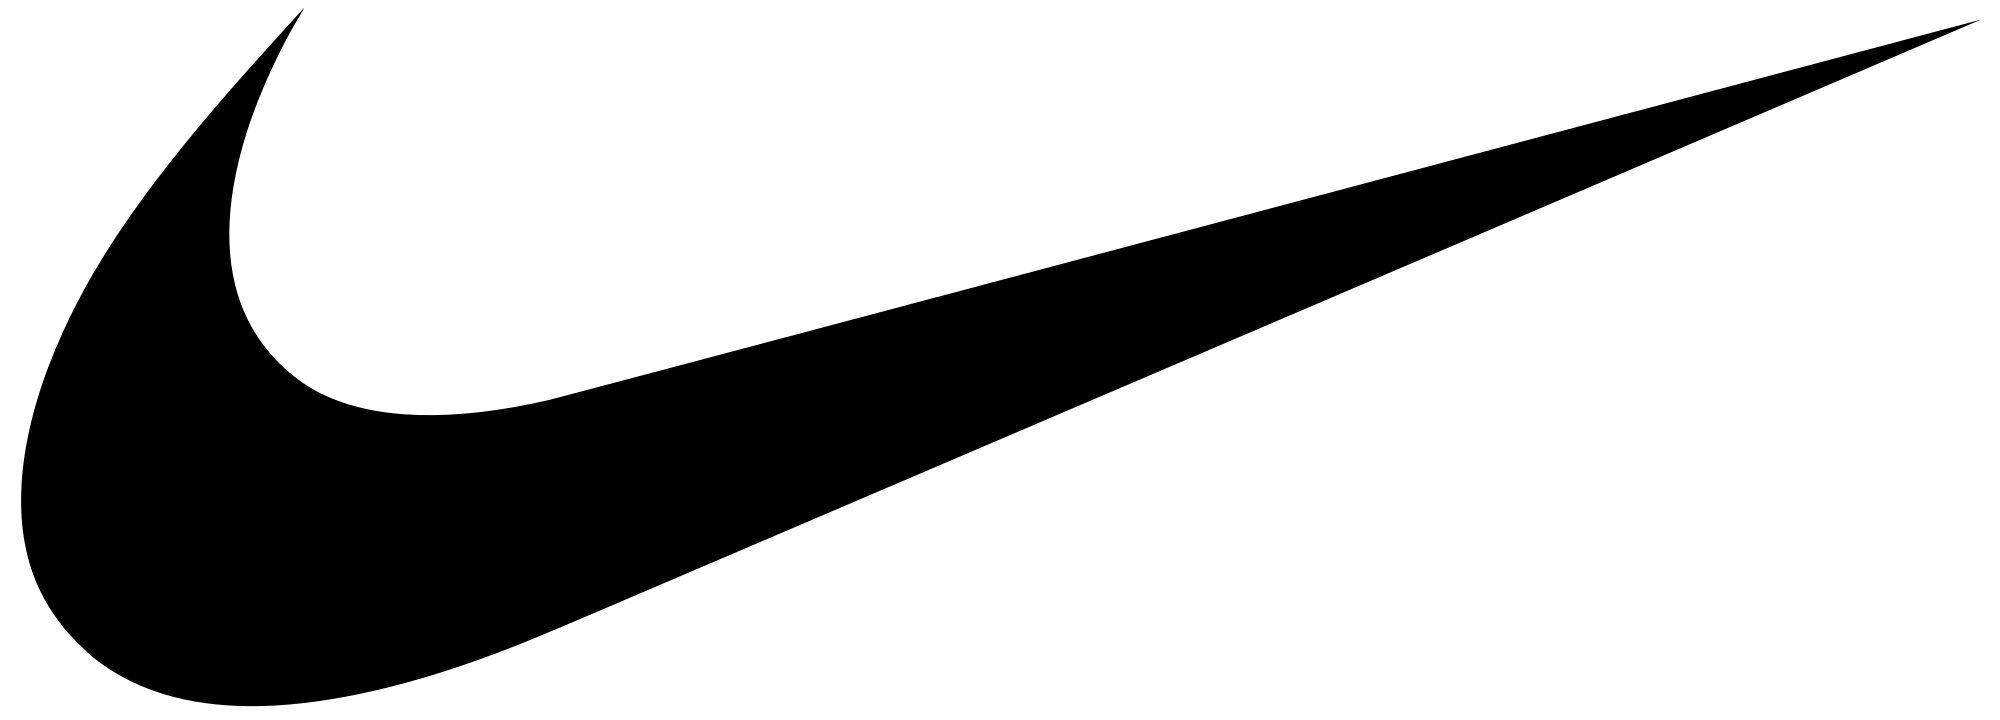 Nike Swish Icon Logo Design